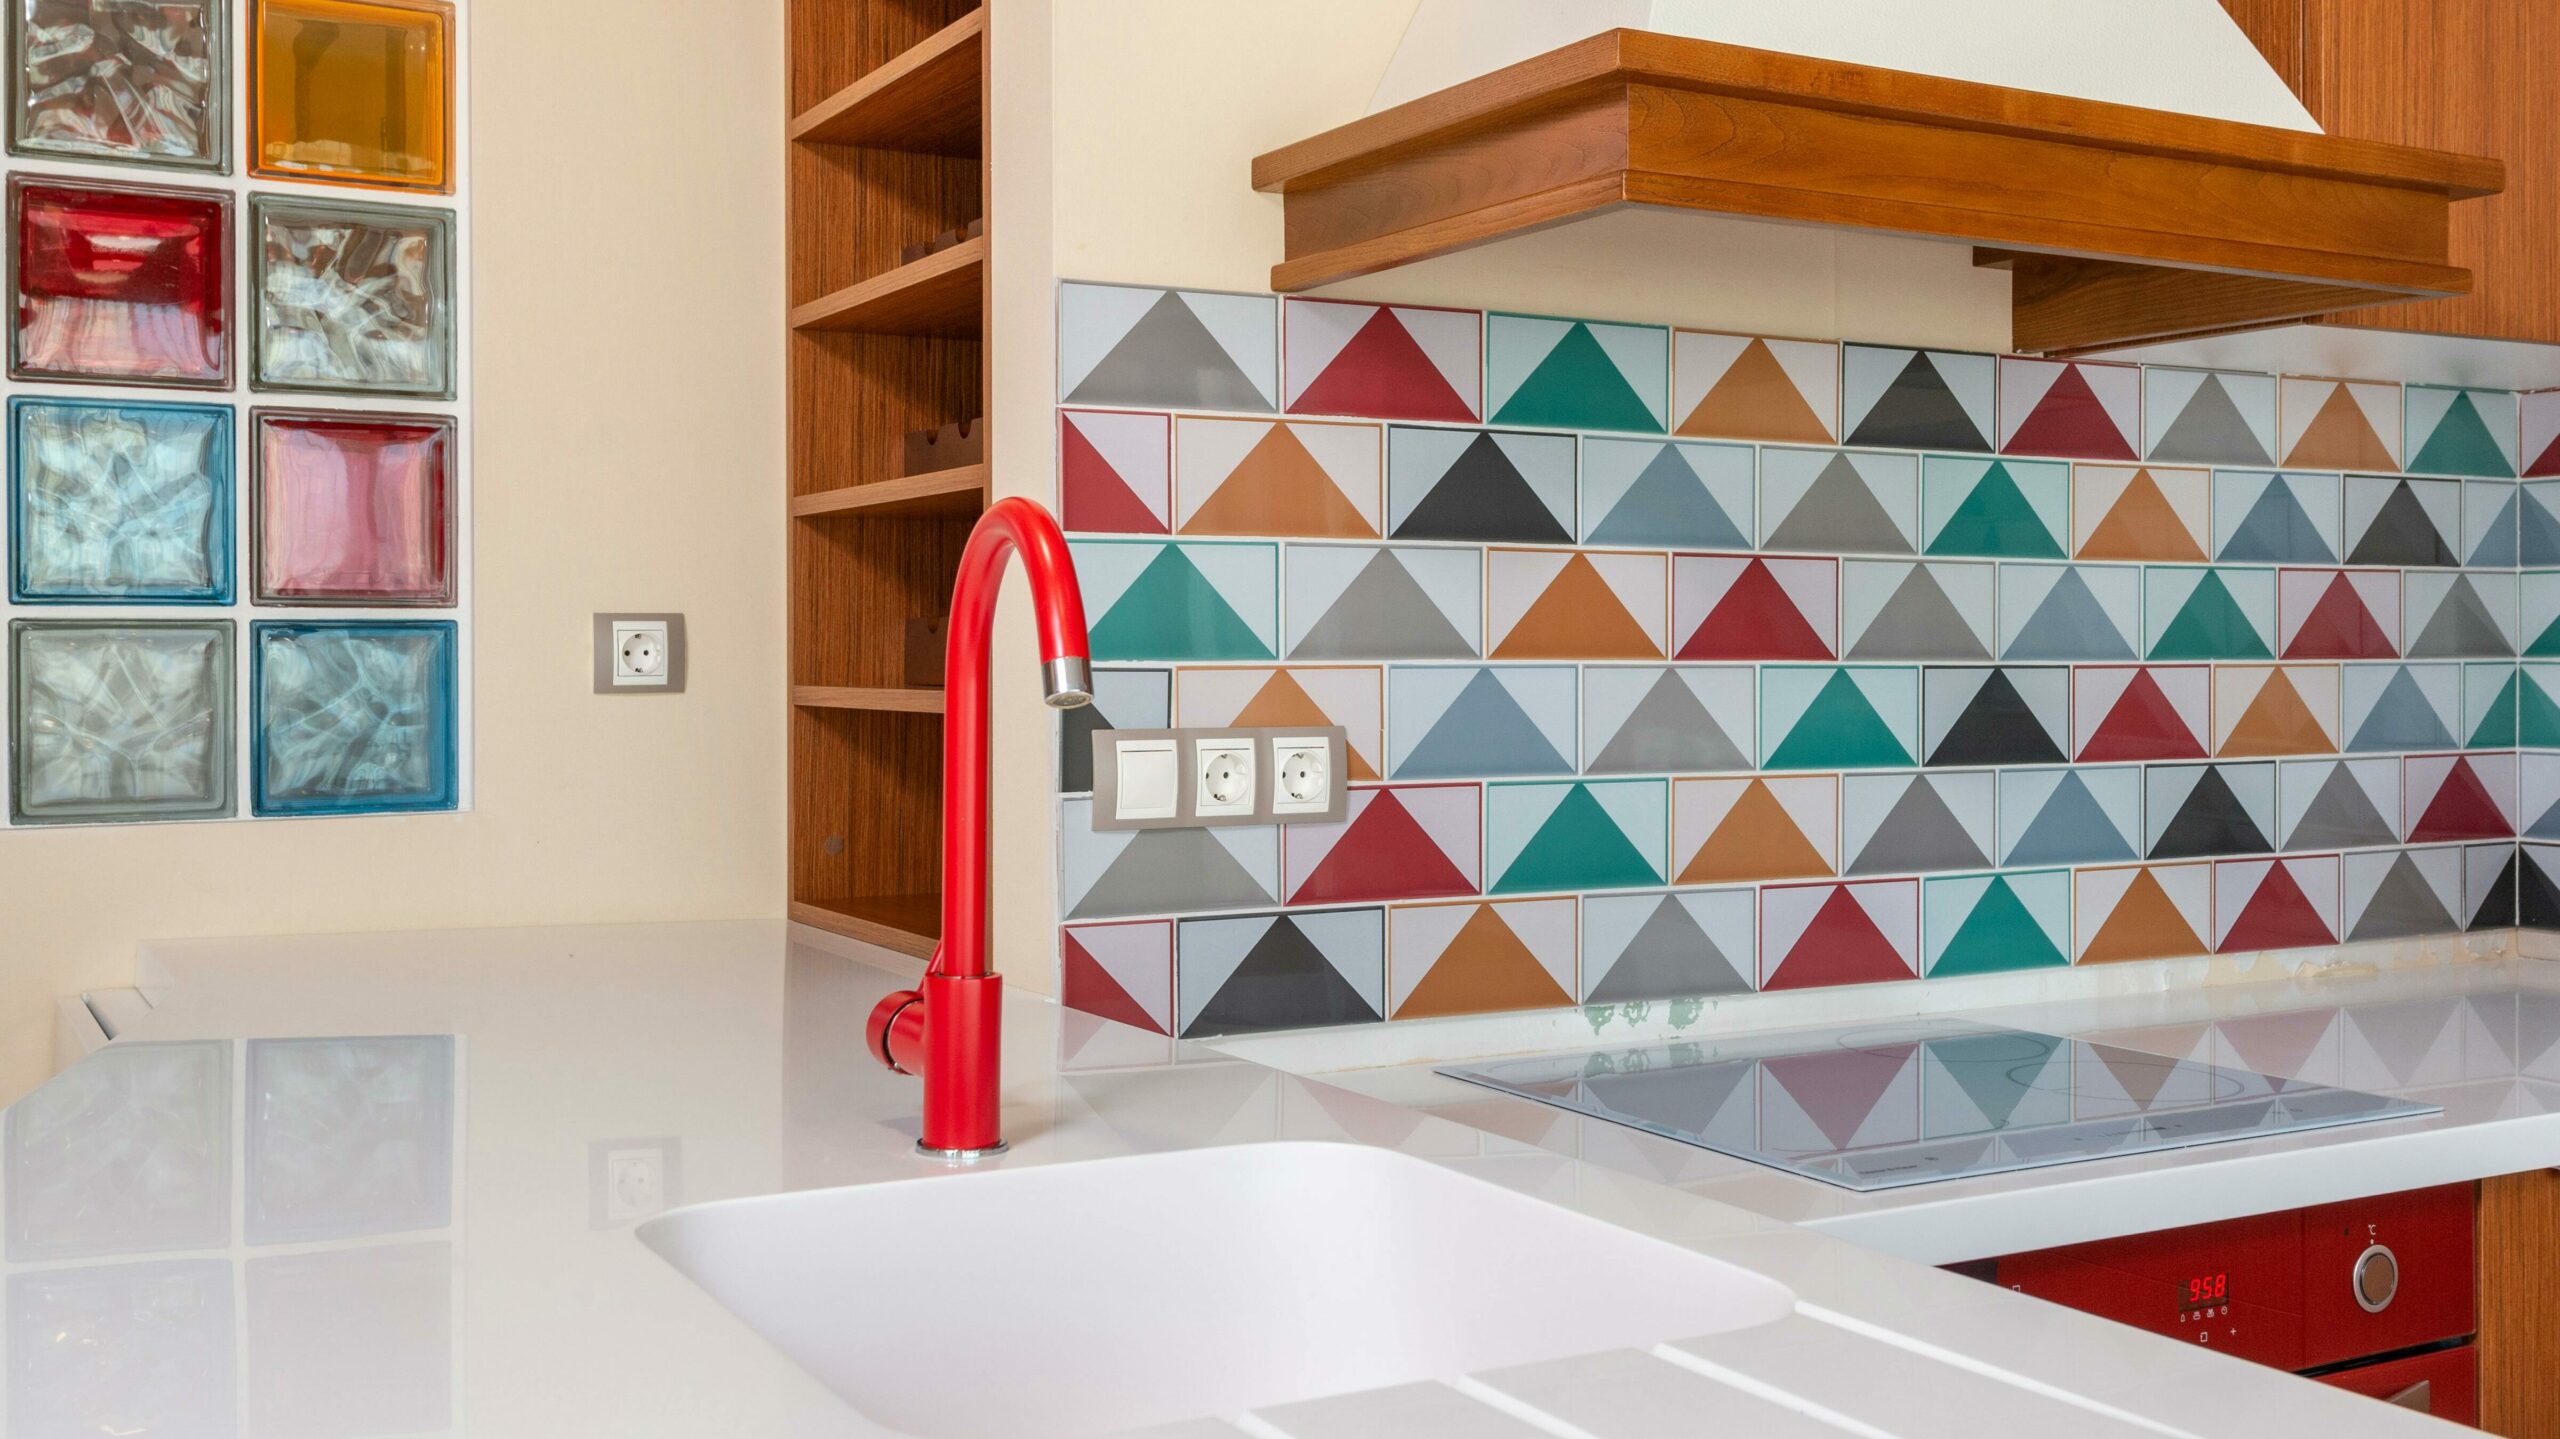 A colorful geometric kitchen backsplash